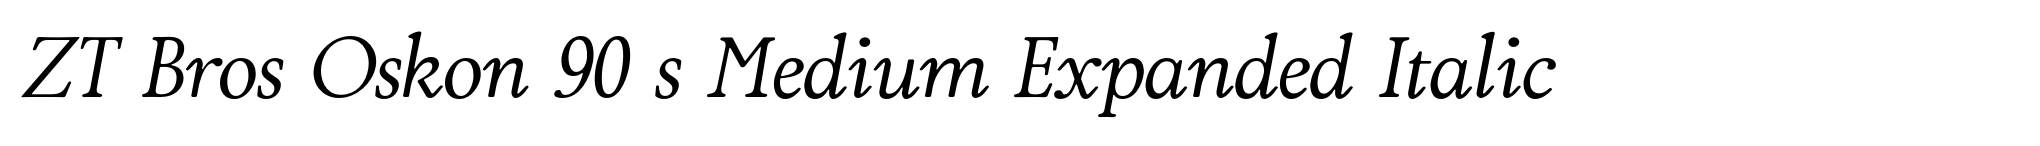 ZT Bros Oskon 90 s Medium Expanded Italic image